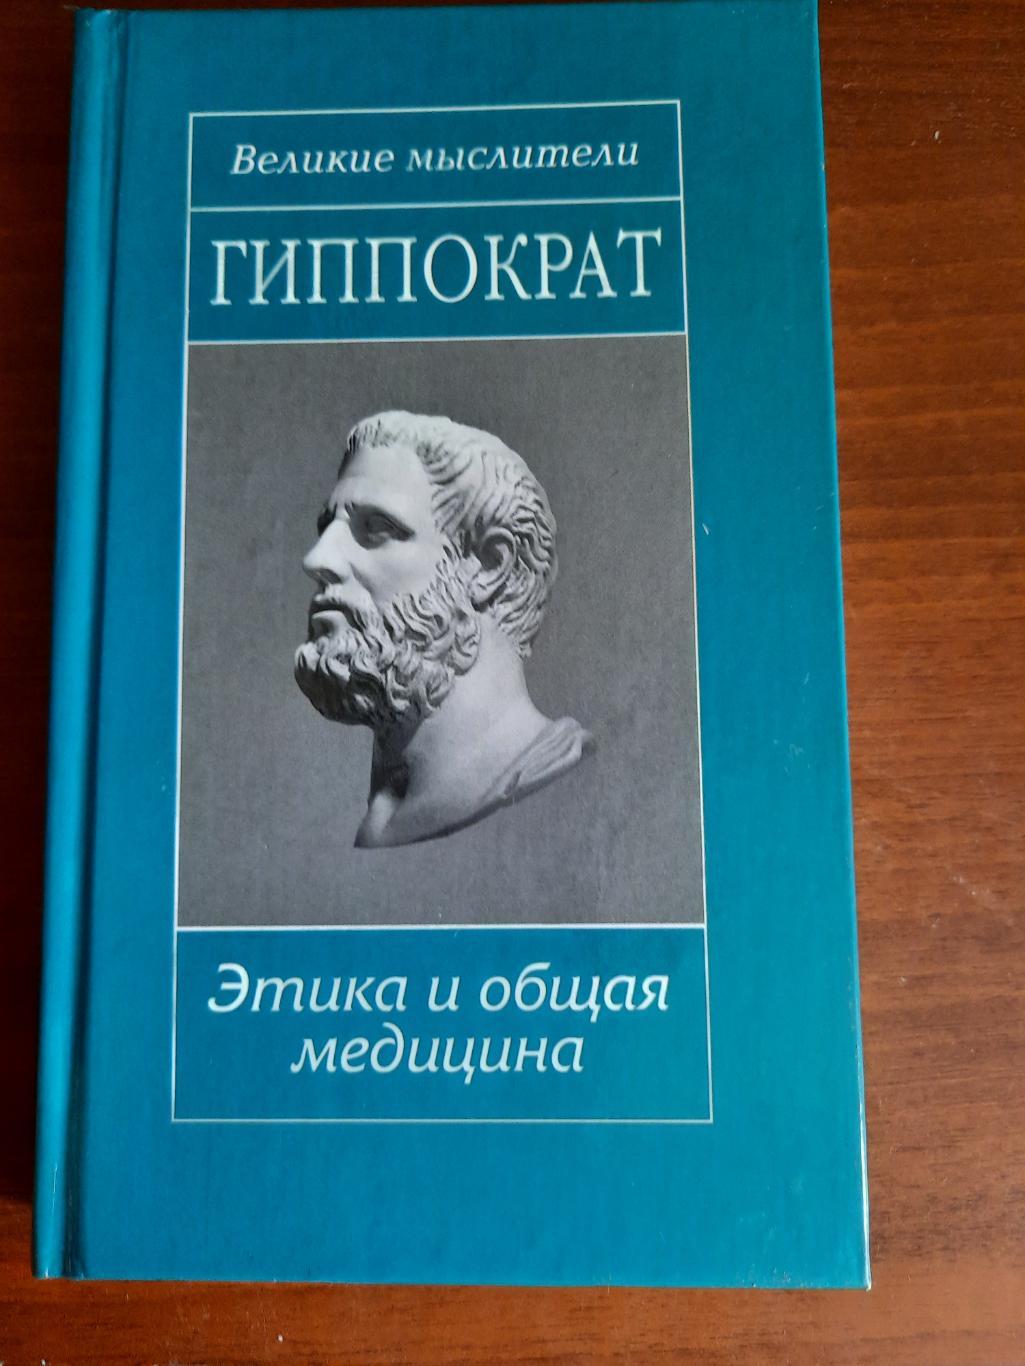 Серия Великие мыслители. Гиппократ. Этика и общая медицина